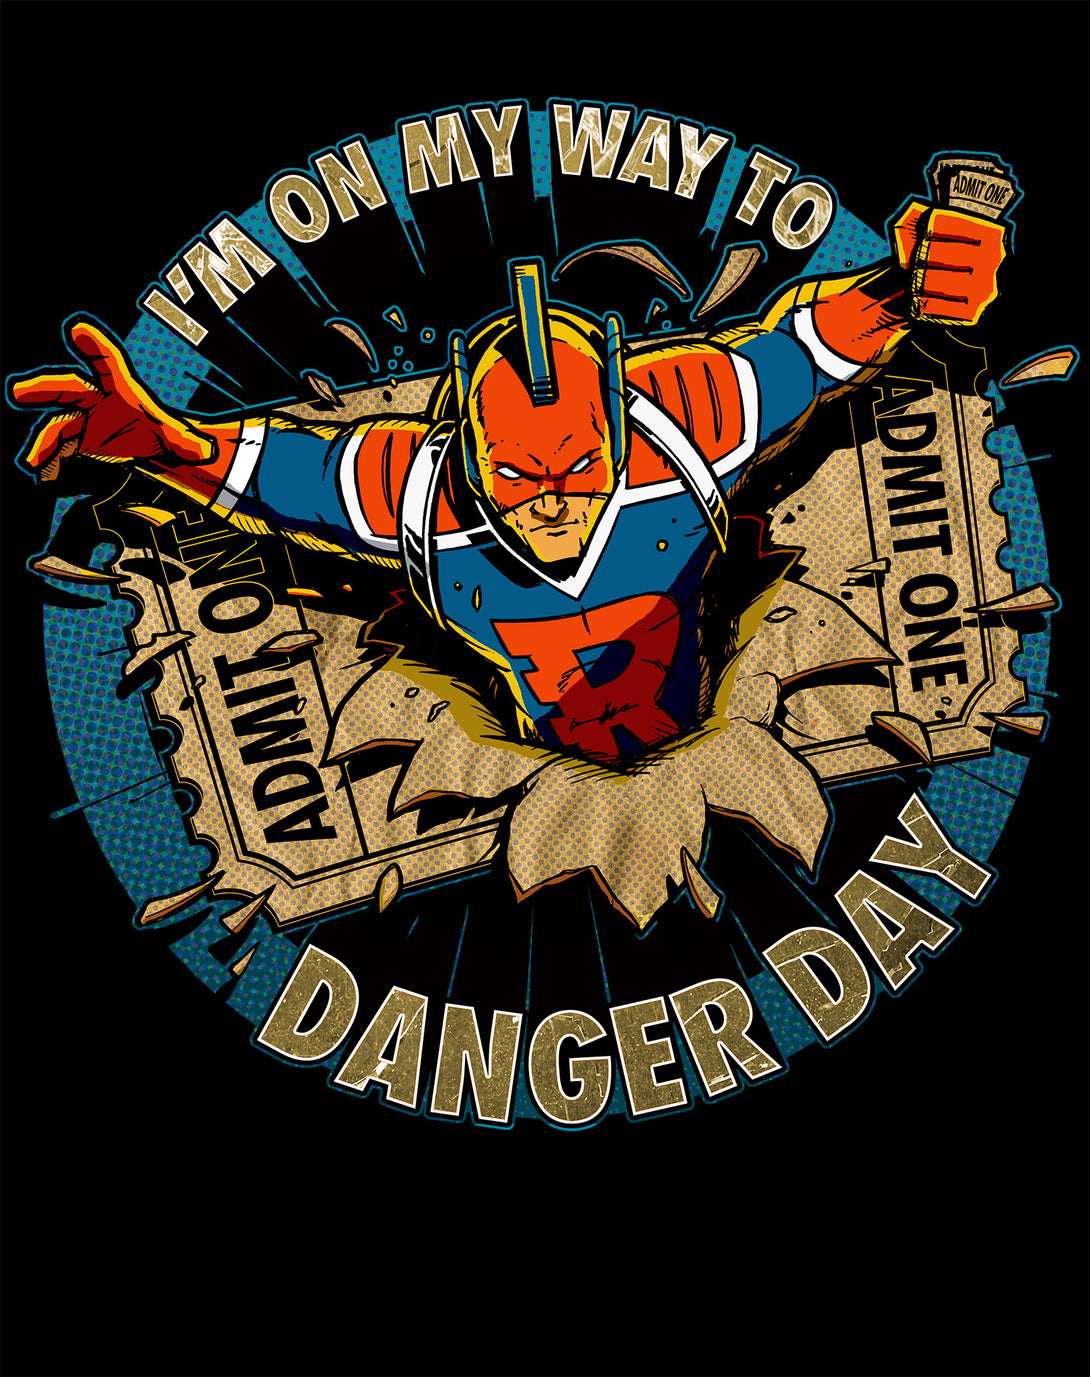 Kevin Smith View Askewniverse Danger Days Logo LDN Edition Official Men's T-Shirt Black - Urban Species Design Close Up